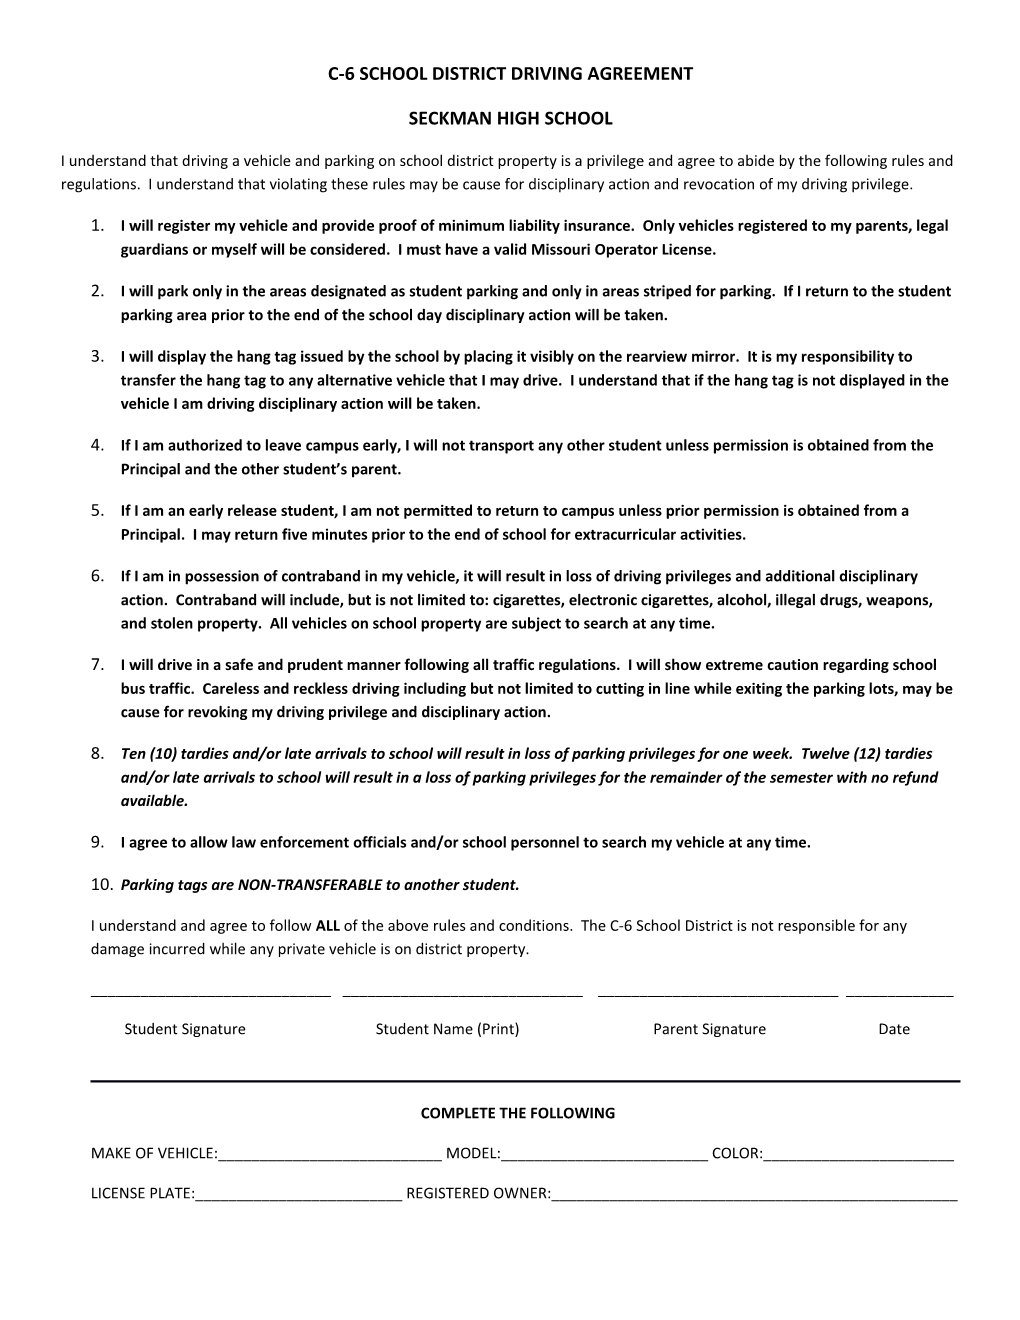 C-6 School District Driving Agreement